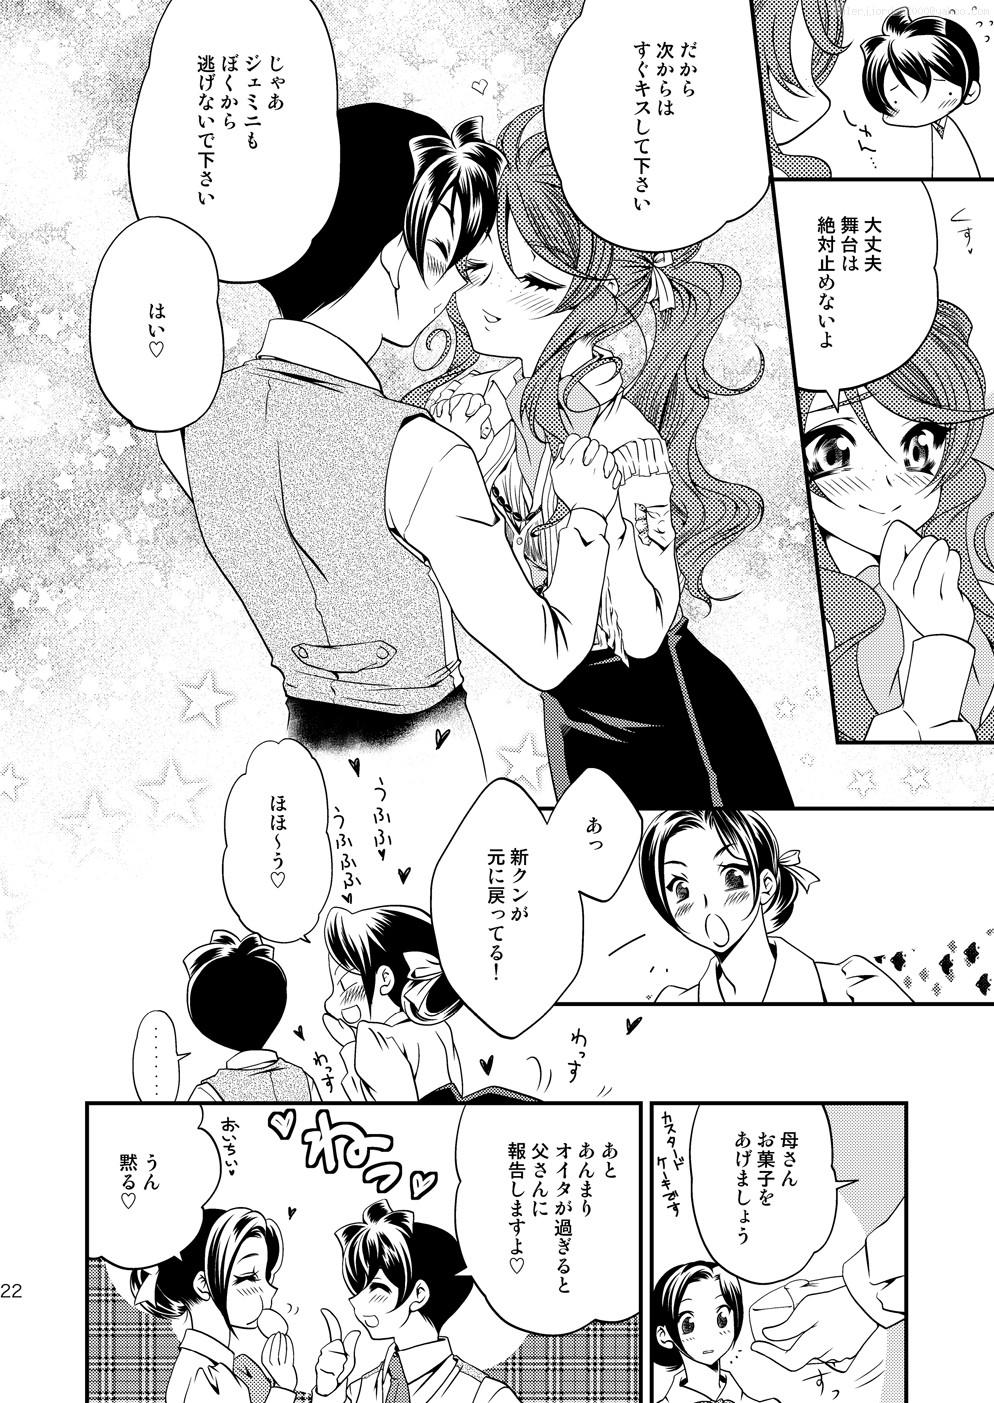 Maru Maru Mori Mori: Gemini Begs For A Kiss Because of the Sticky Medicine 20